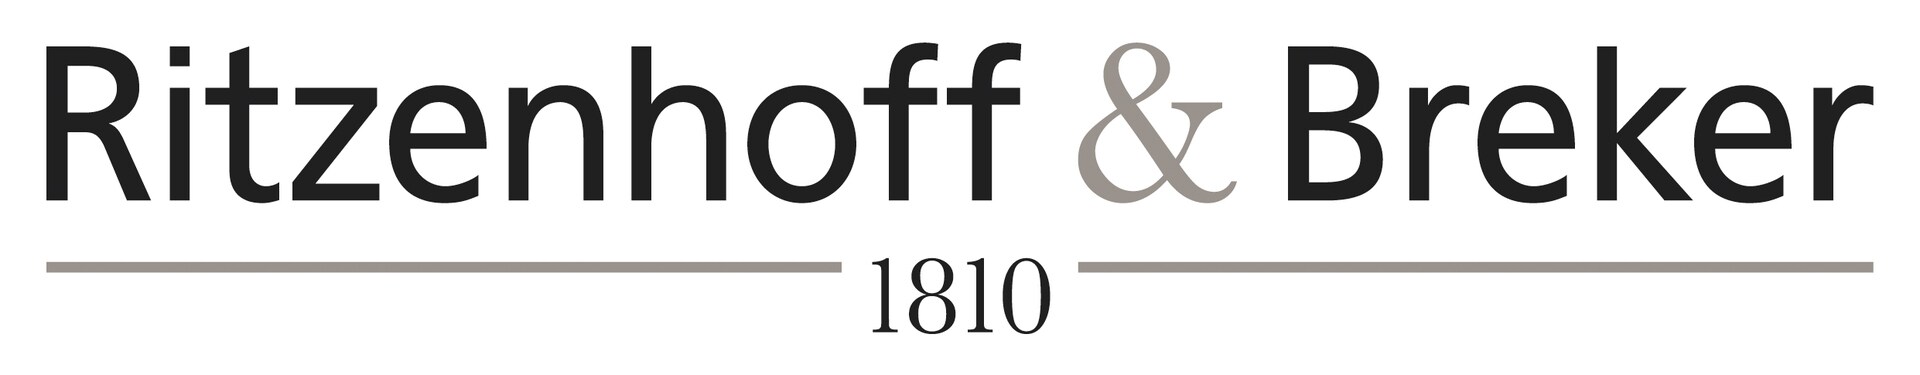 Ritzenhoff & Breker-logo